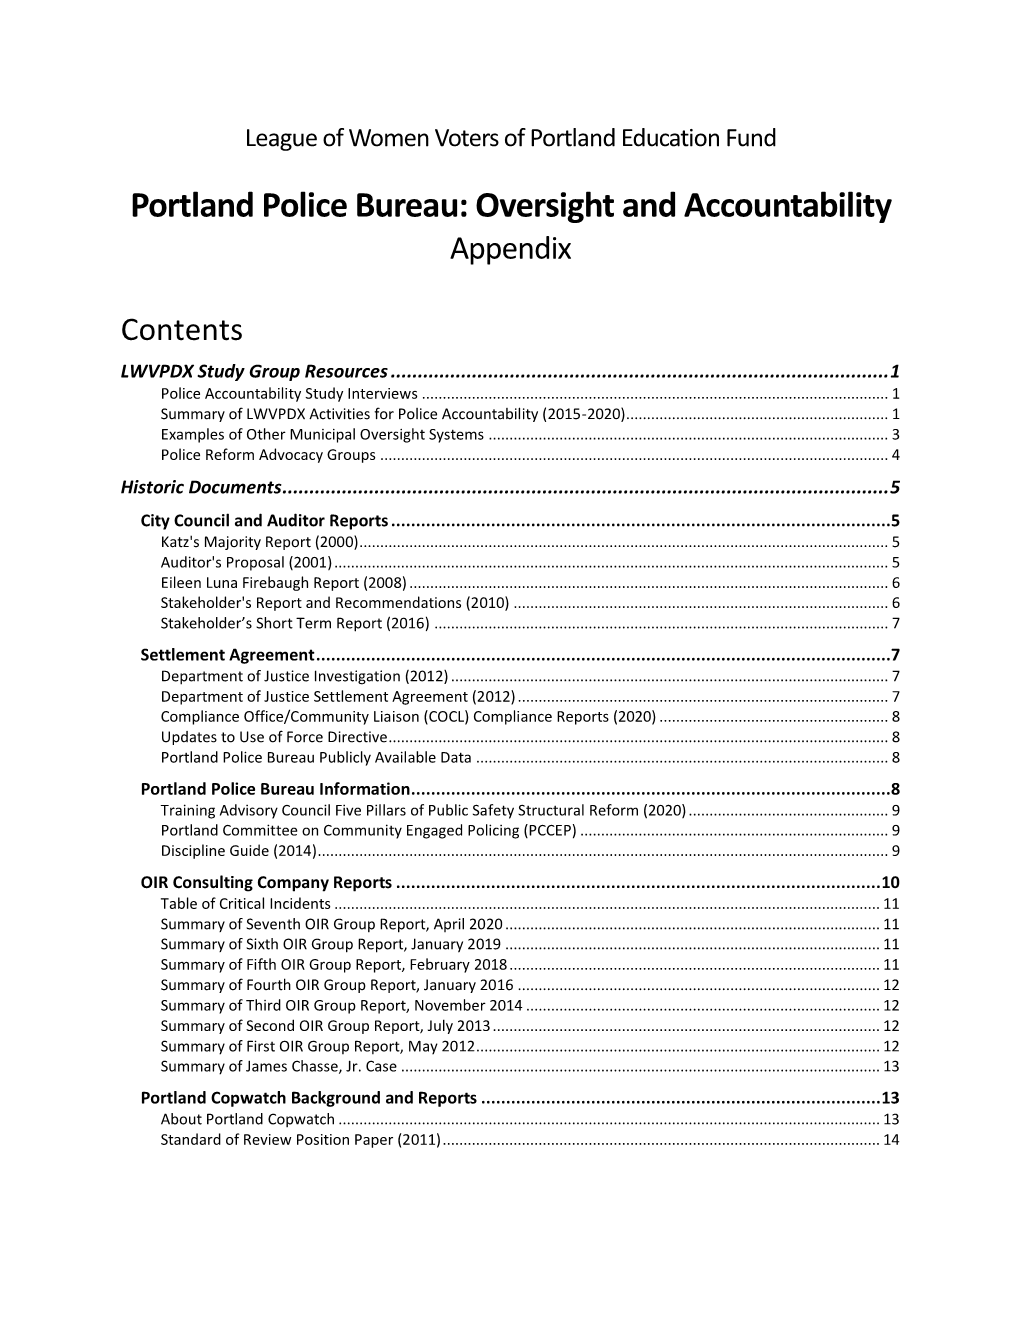 Portland Police Bureau: Oversight and Accountability Appendix